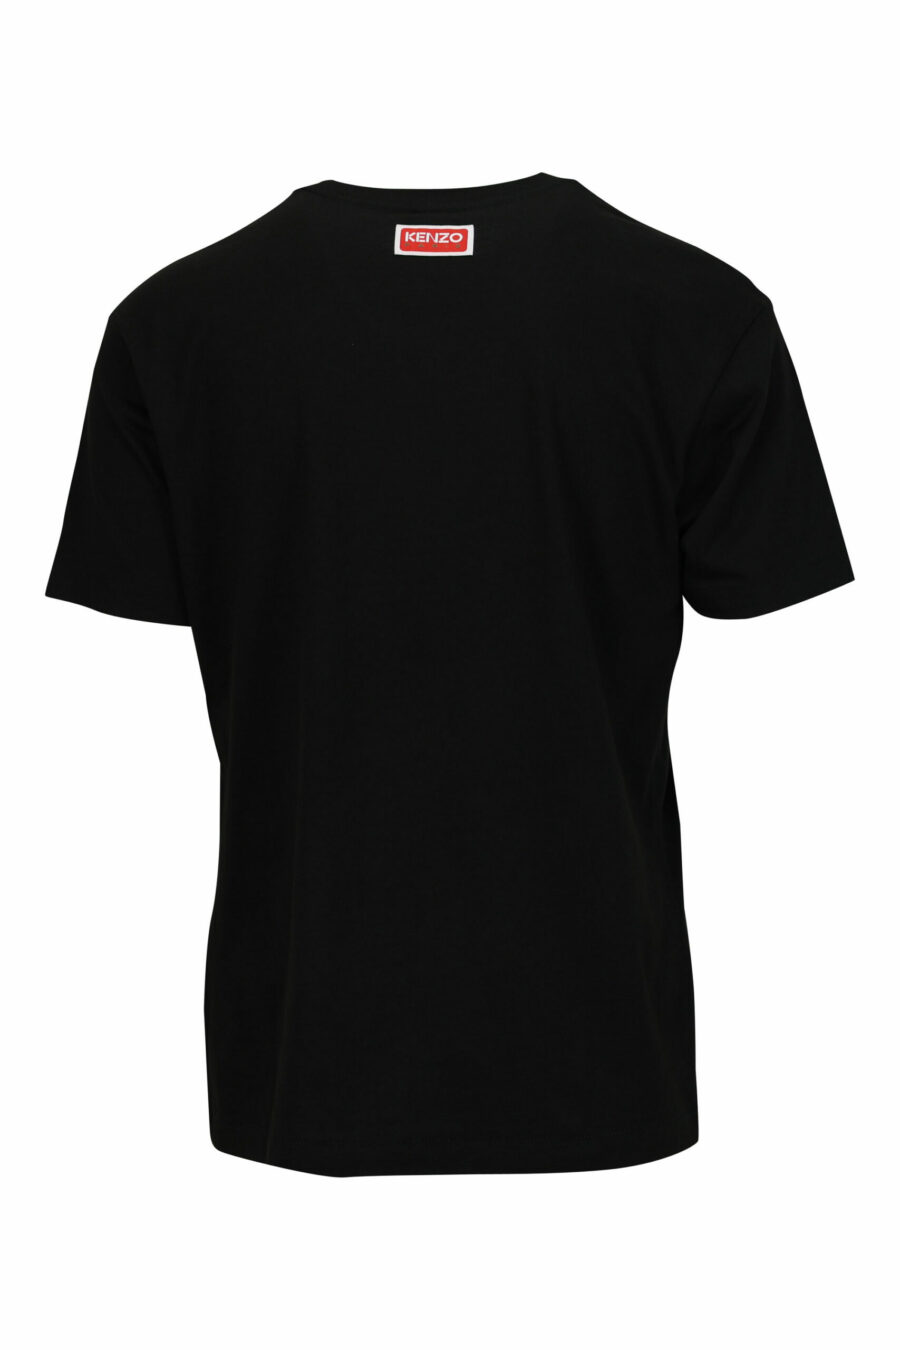 Camiseta negra "oversize" logo grande elefante relieve - 3612230568839 1 scaled